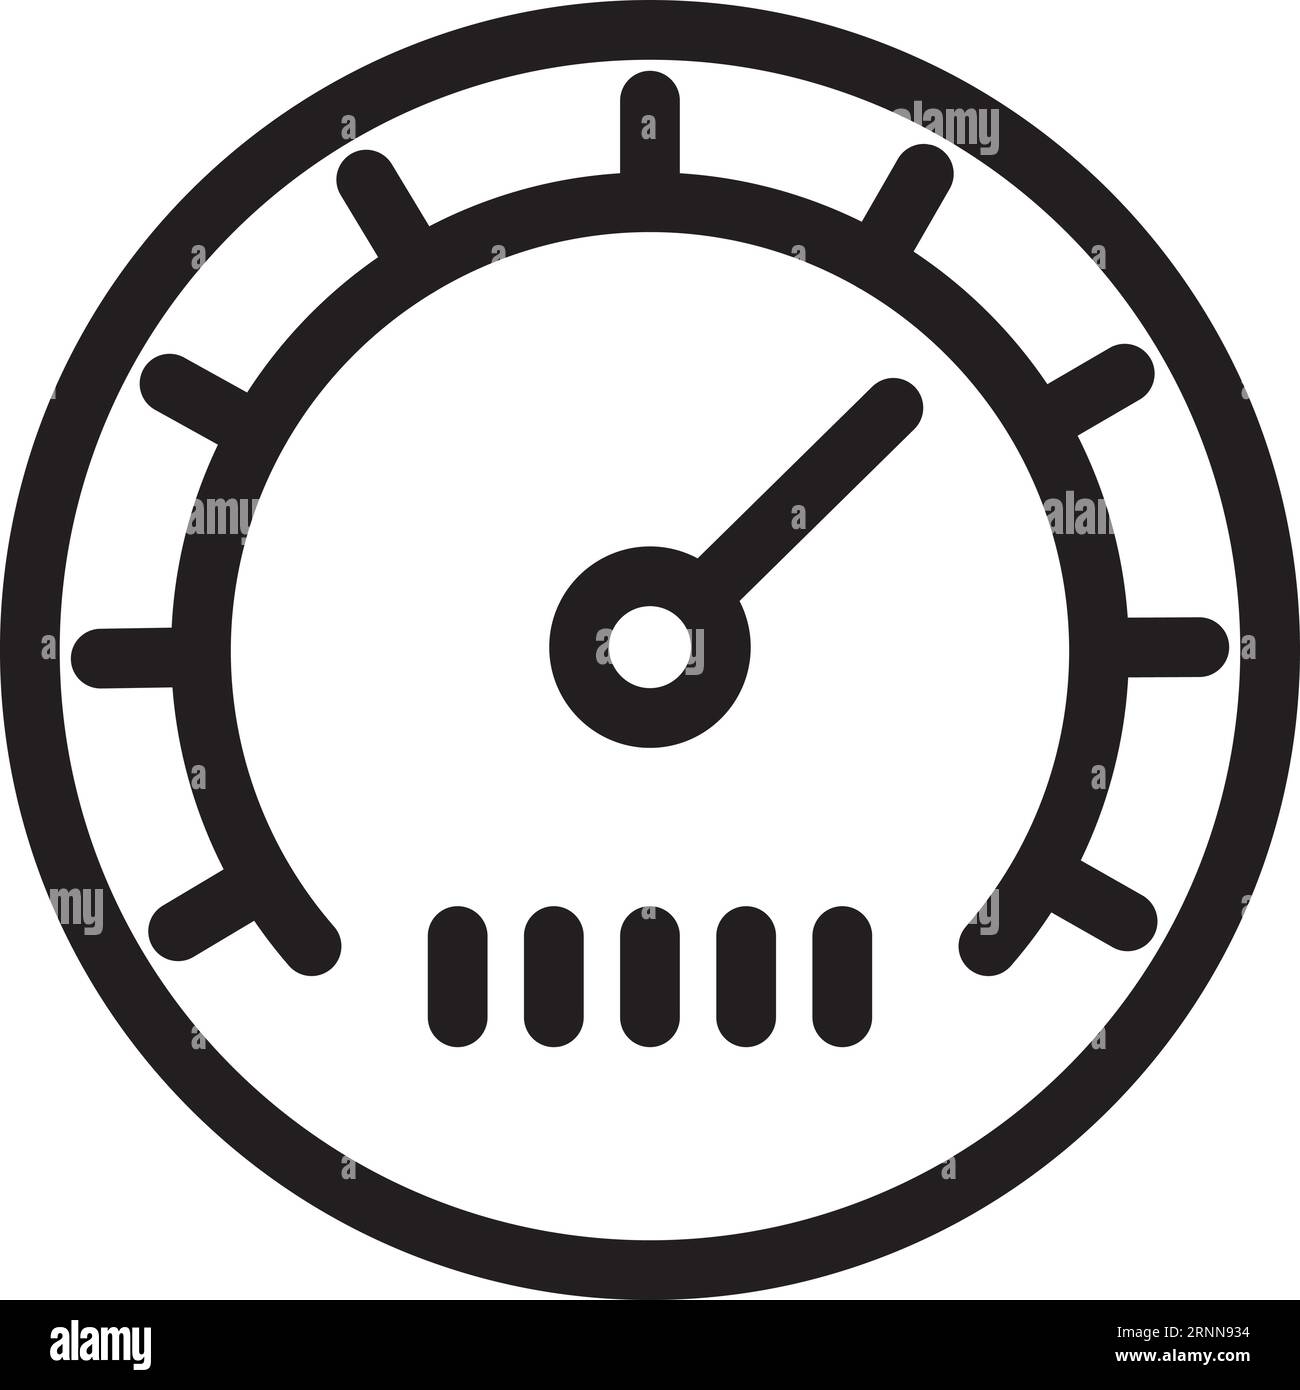 Round indicator icon. Control panel measurement symbol Stock Vector